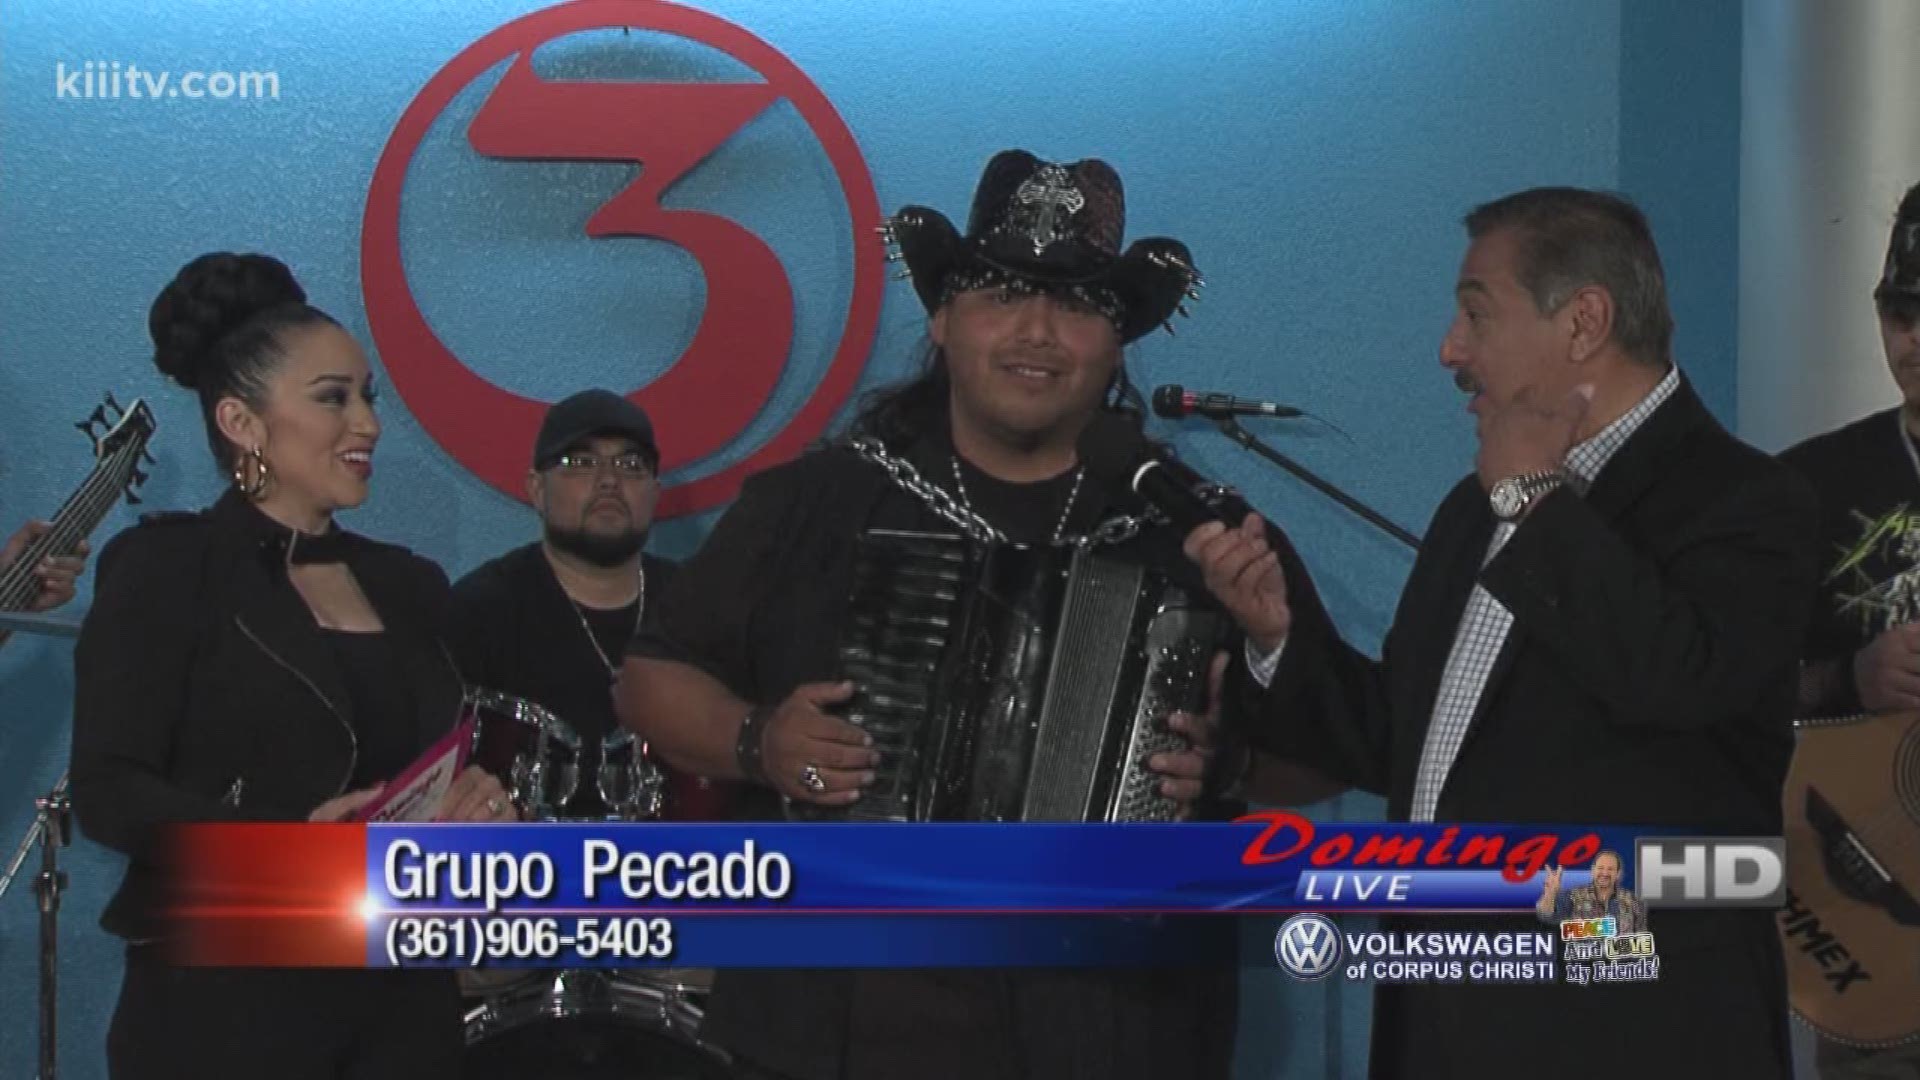 Rudy And Barbi Interview Grupo Pecado on Domingo Live!